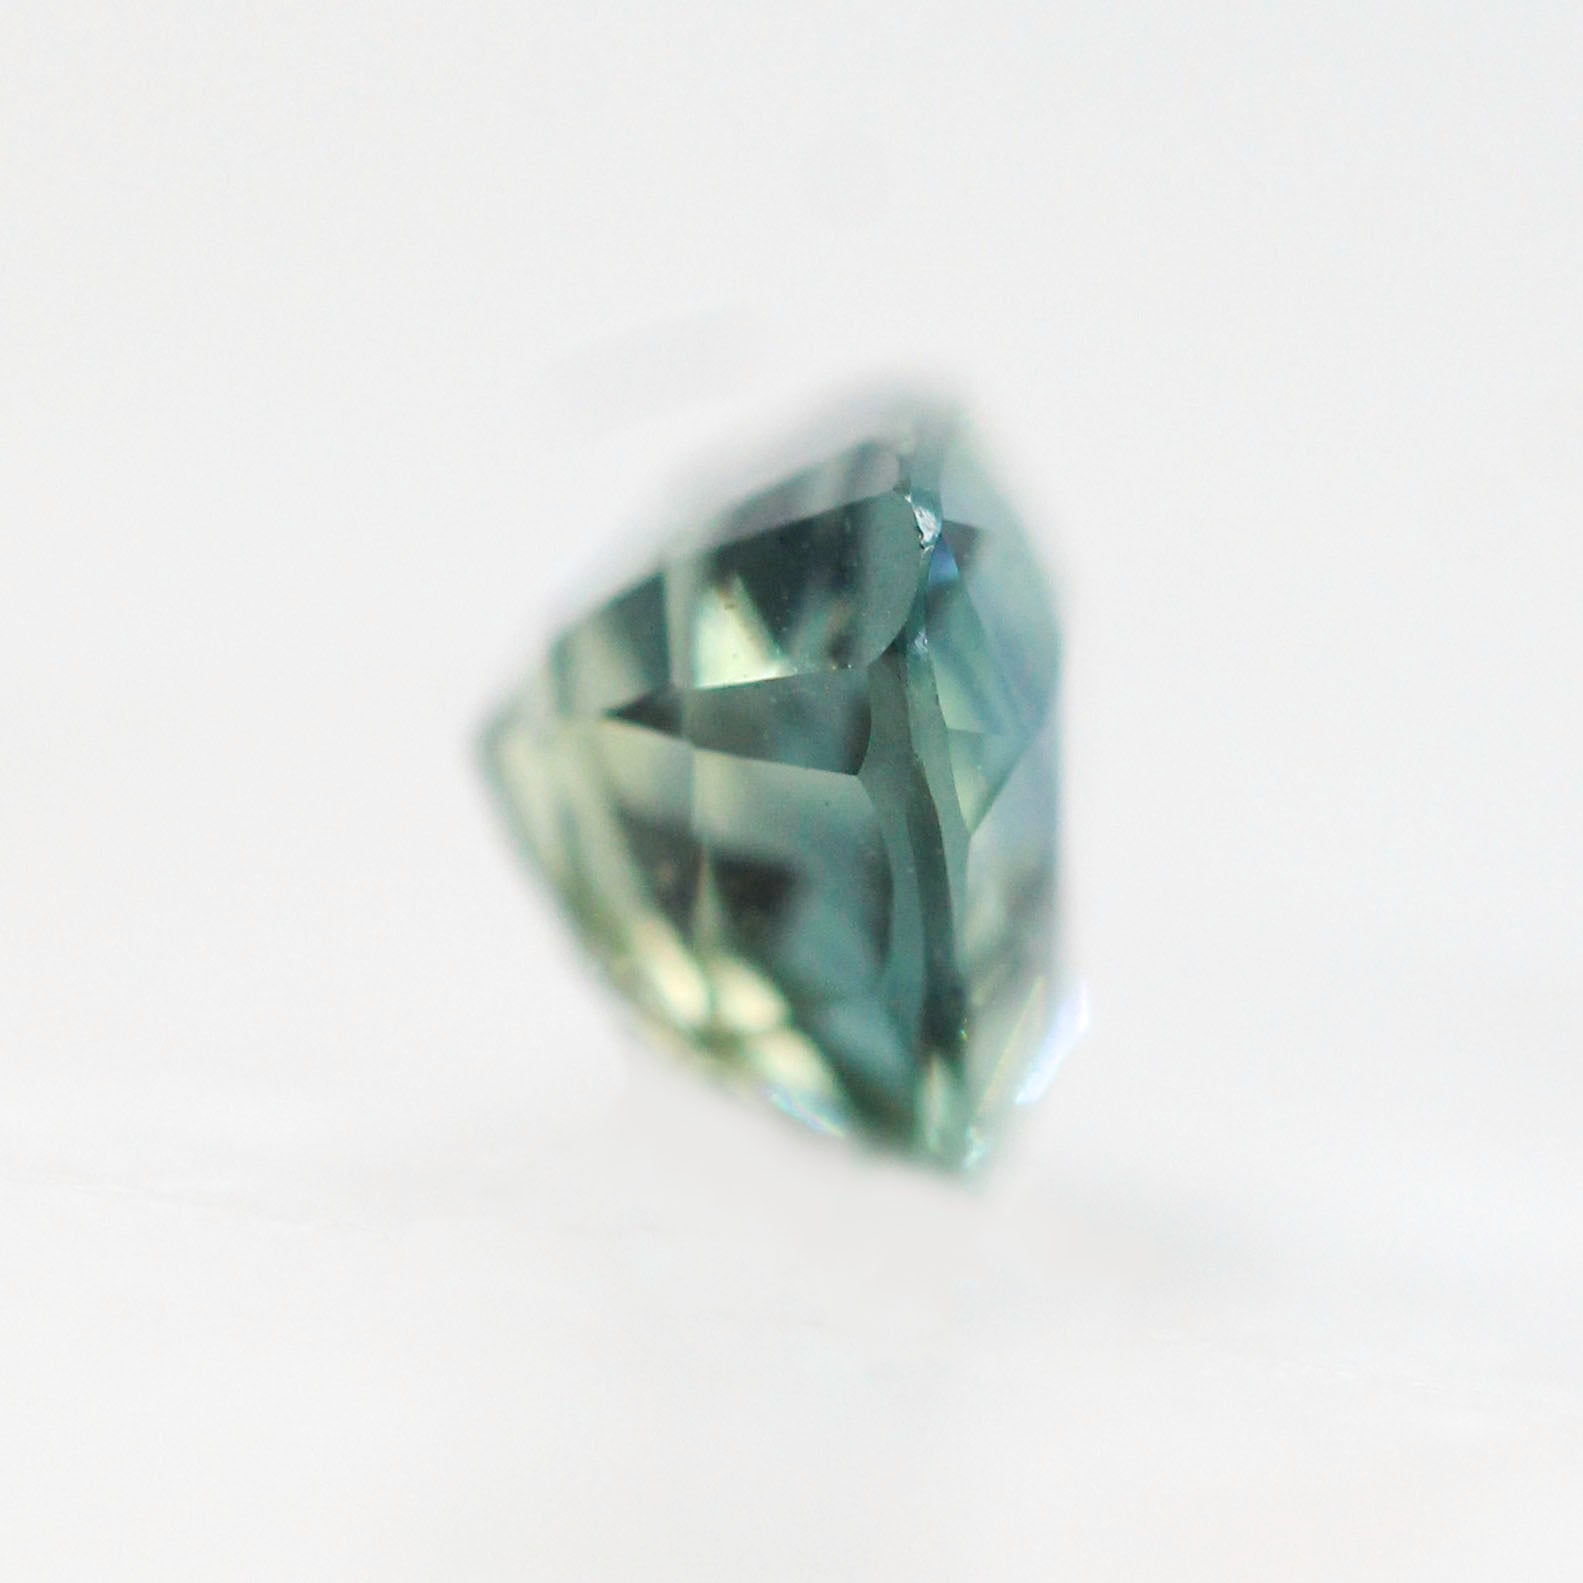 CAELEN (J) 1.13 Carat Blue-Green Trillion Cut Sapphire for Custom Work - Inventory Code BGTS113 - Midwinter Co. Alternative Bridal Rings and Modern Fine Jewelry